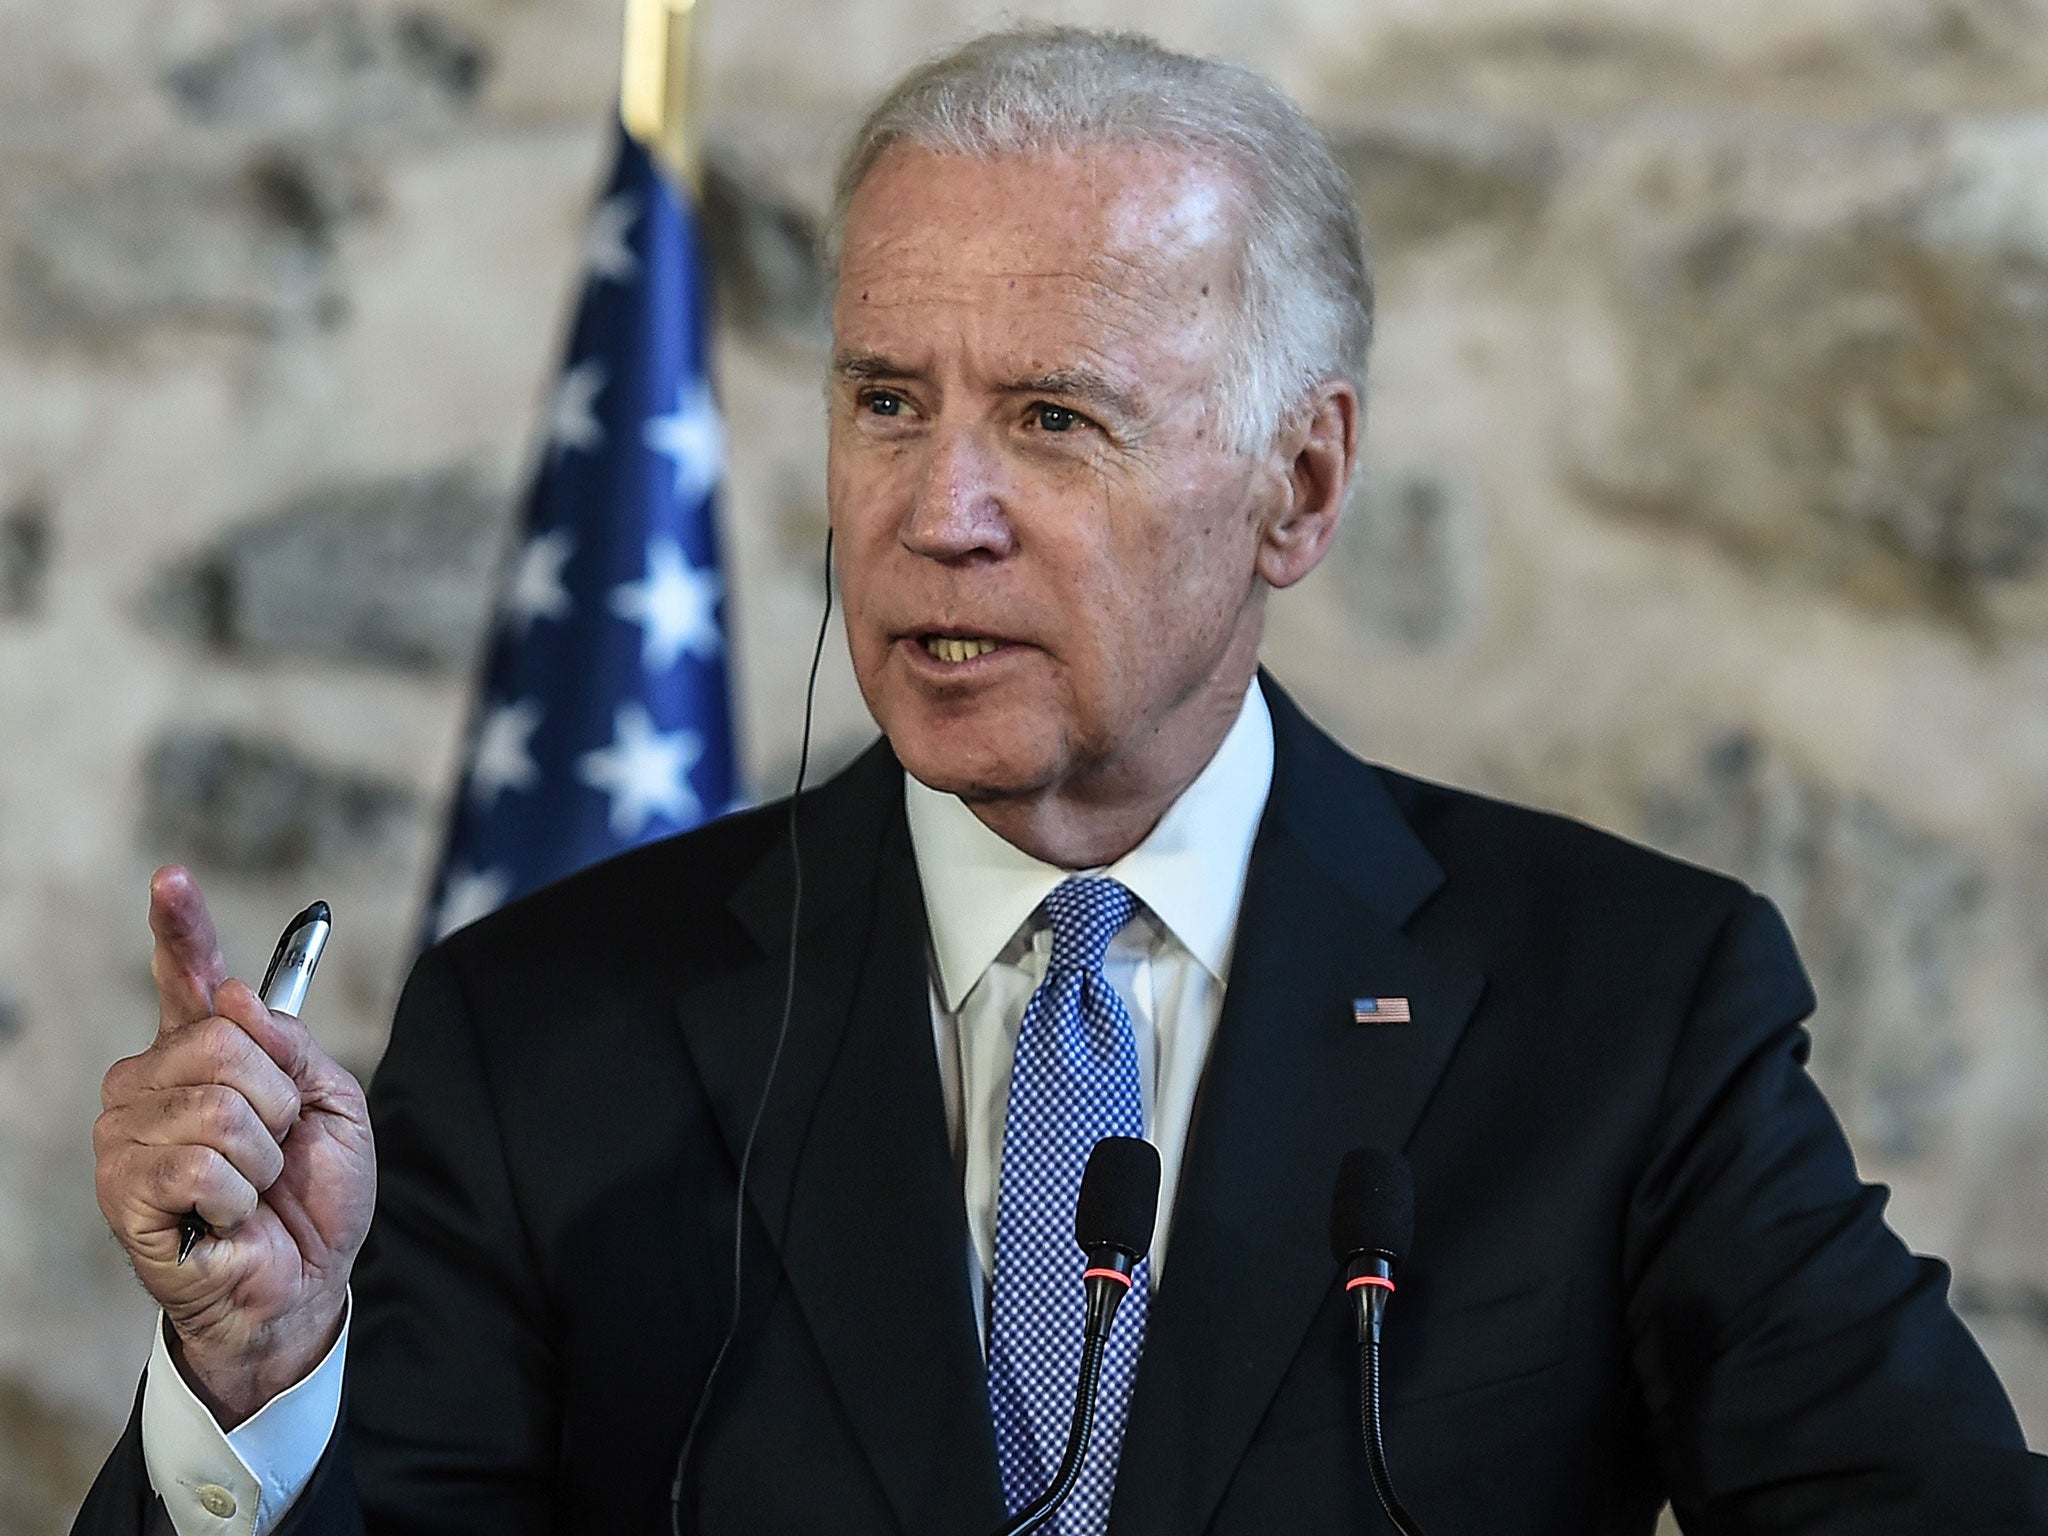 Joe Biden said a political deal would be preferable